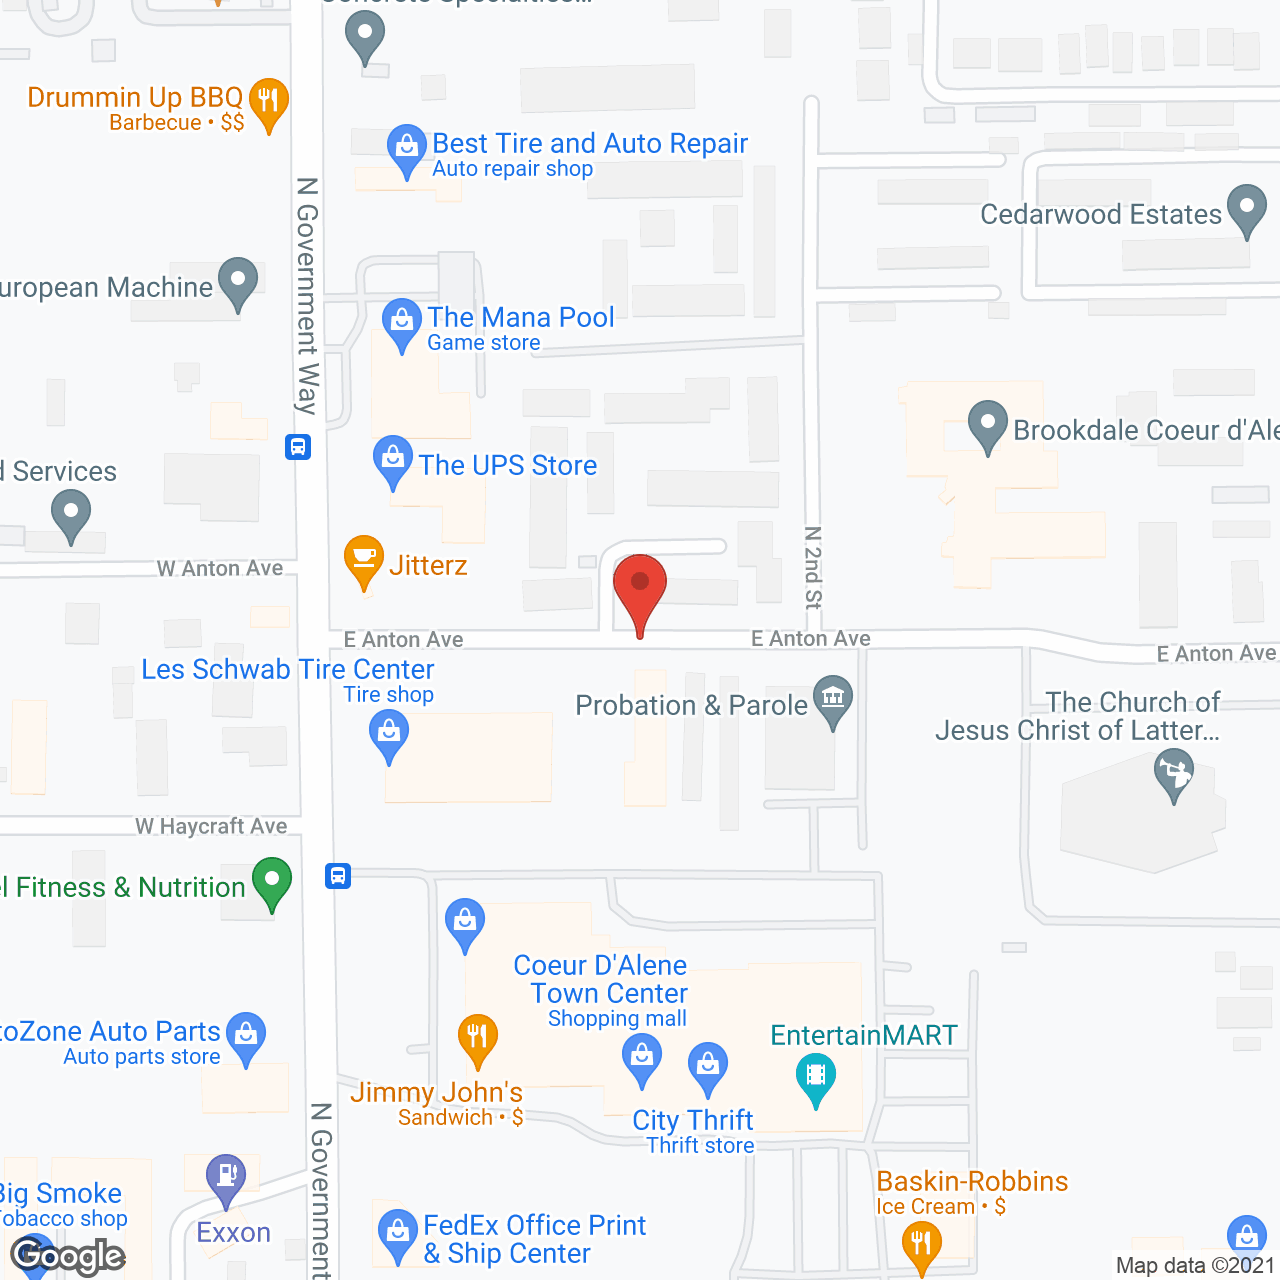 Brookdale Coeur d'Alene in google map